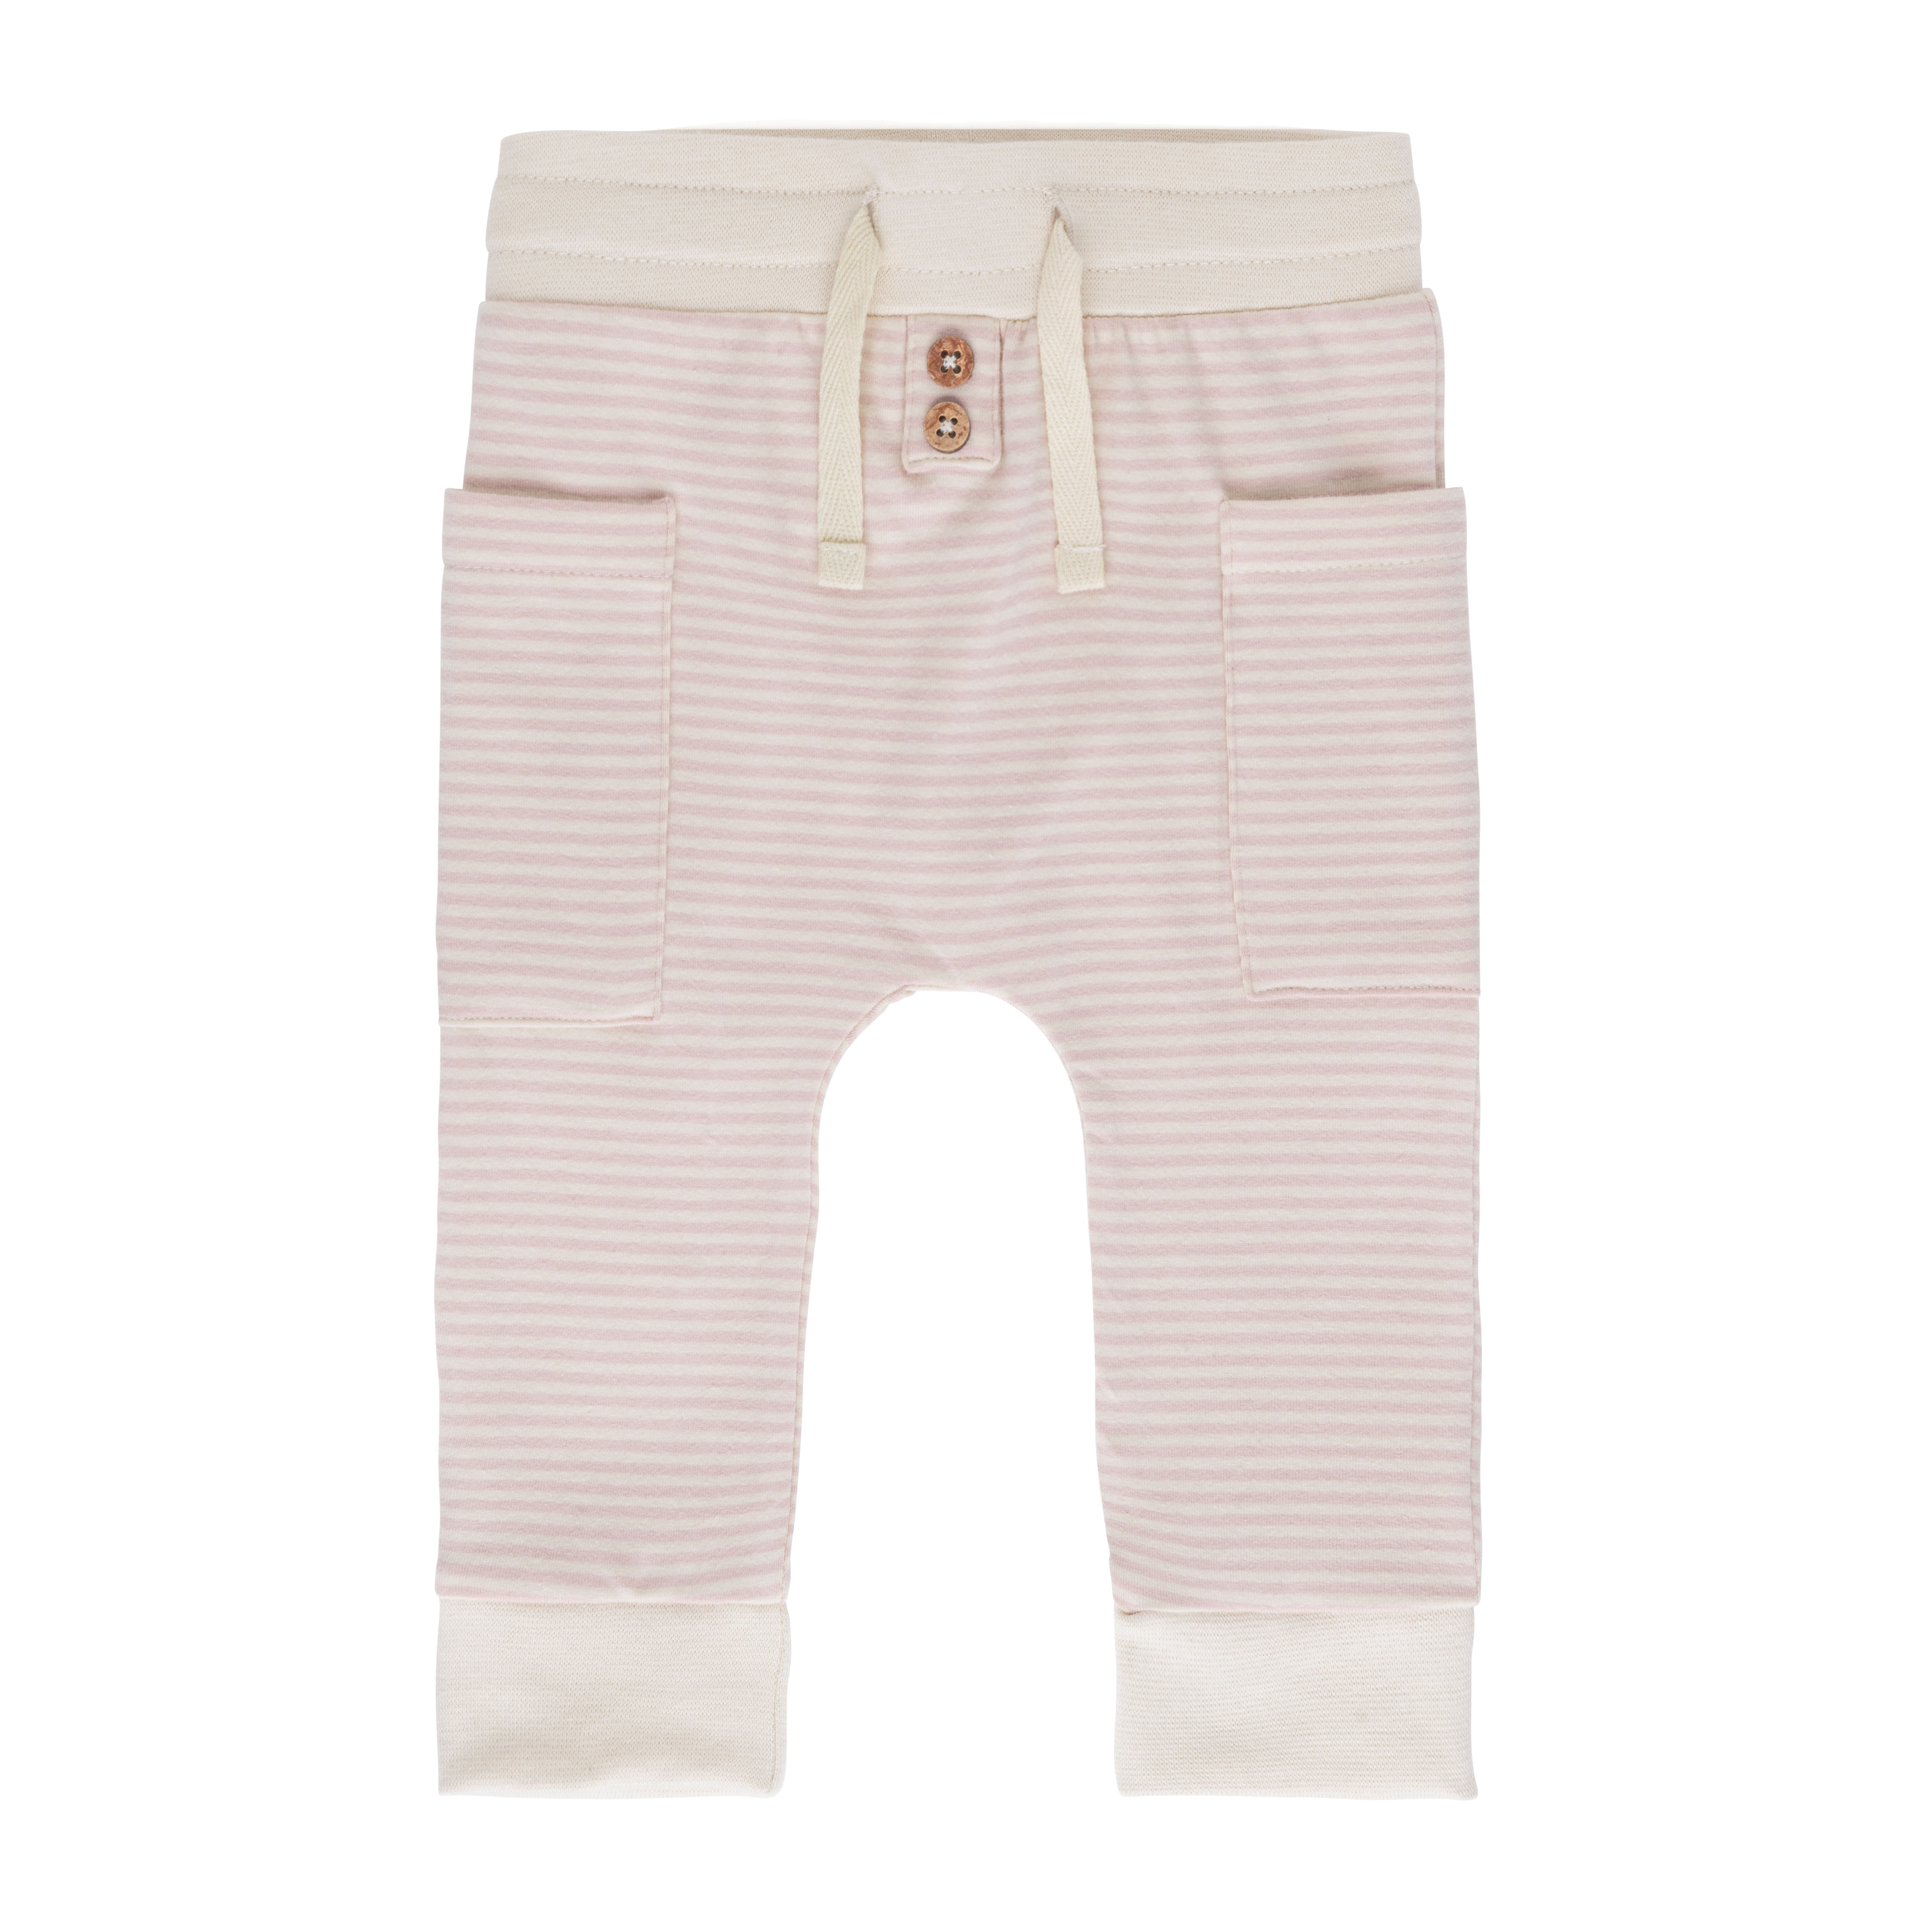 Pants Stripe old pink - 74